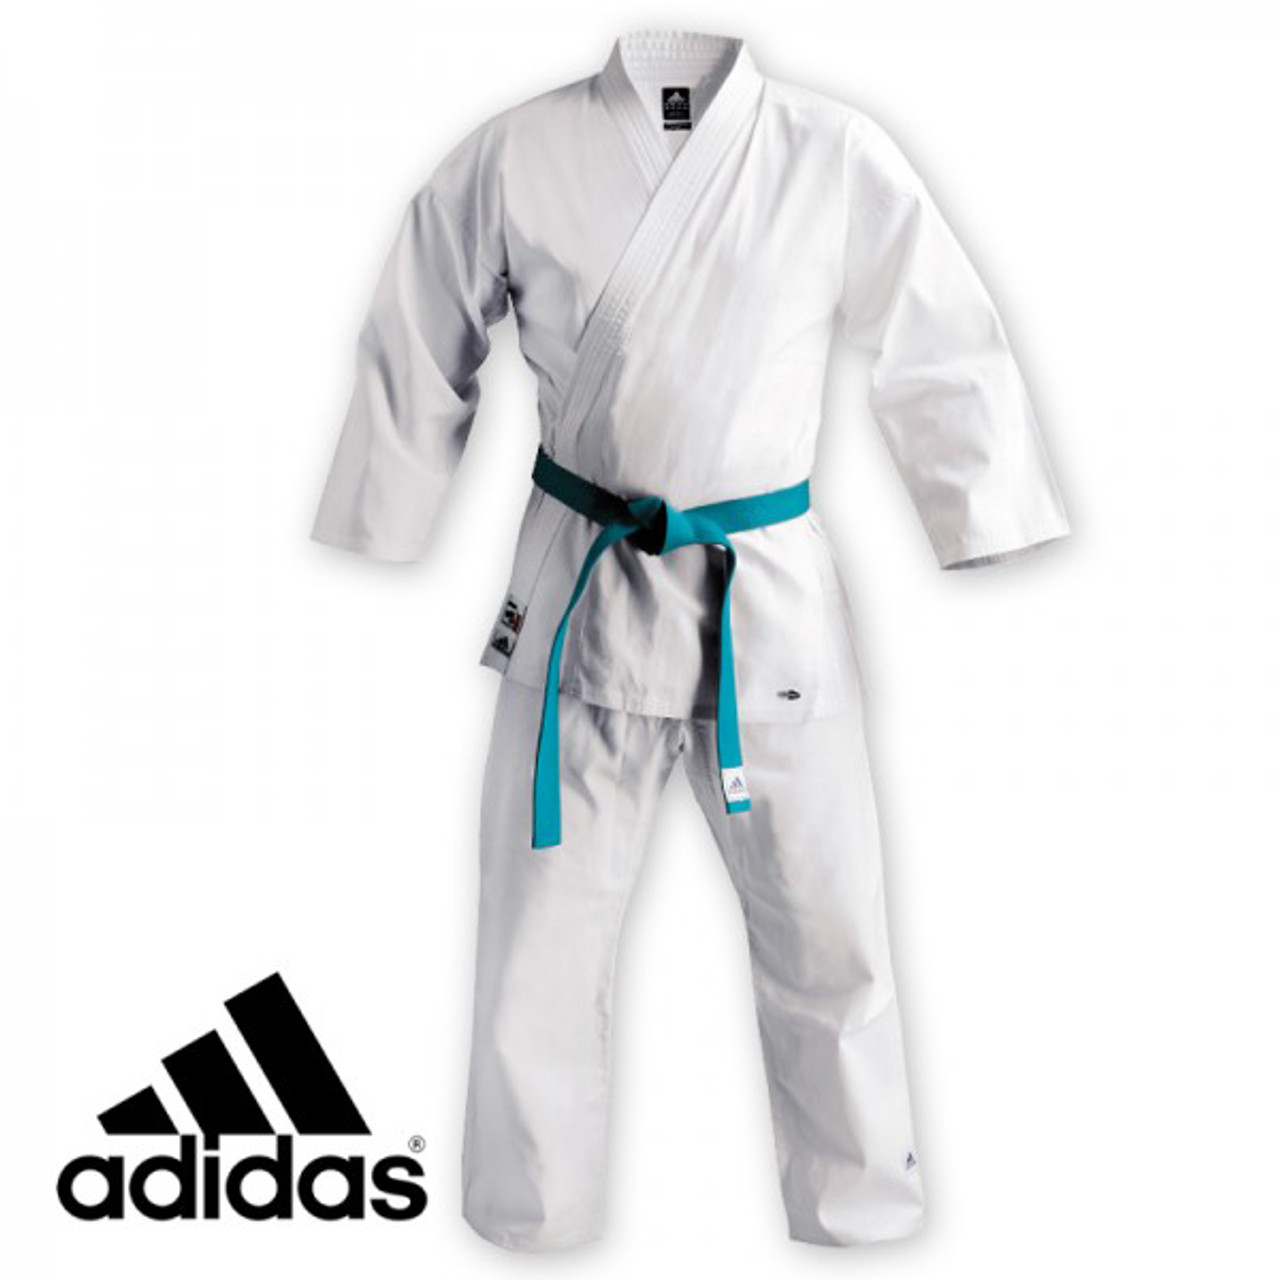 adidas karate uniforms sale